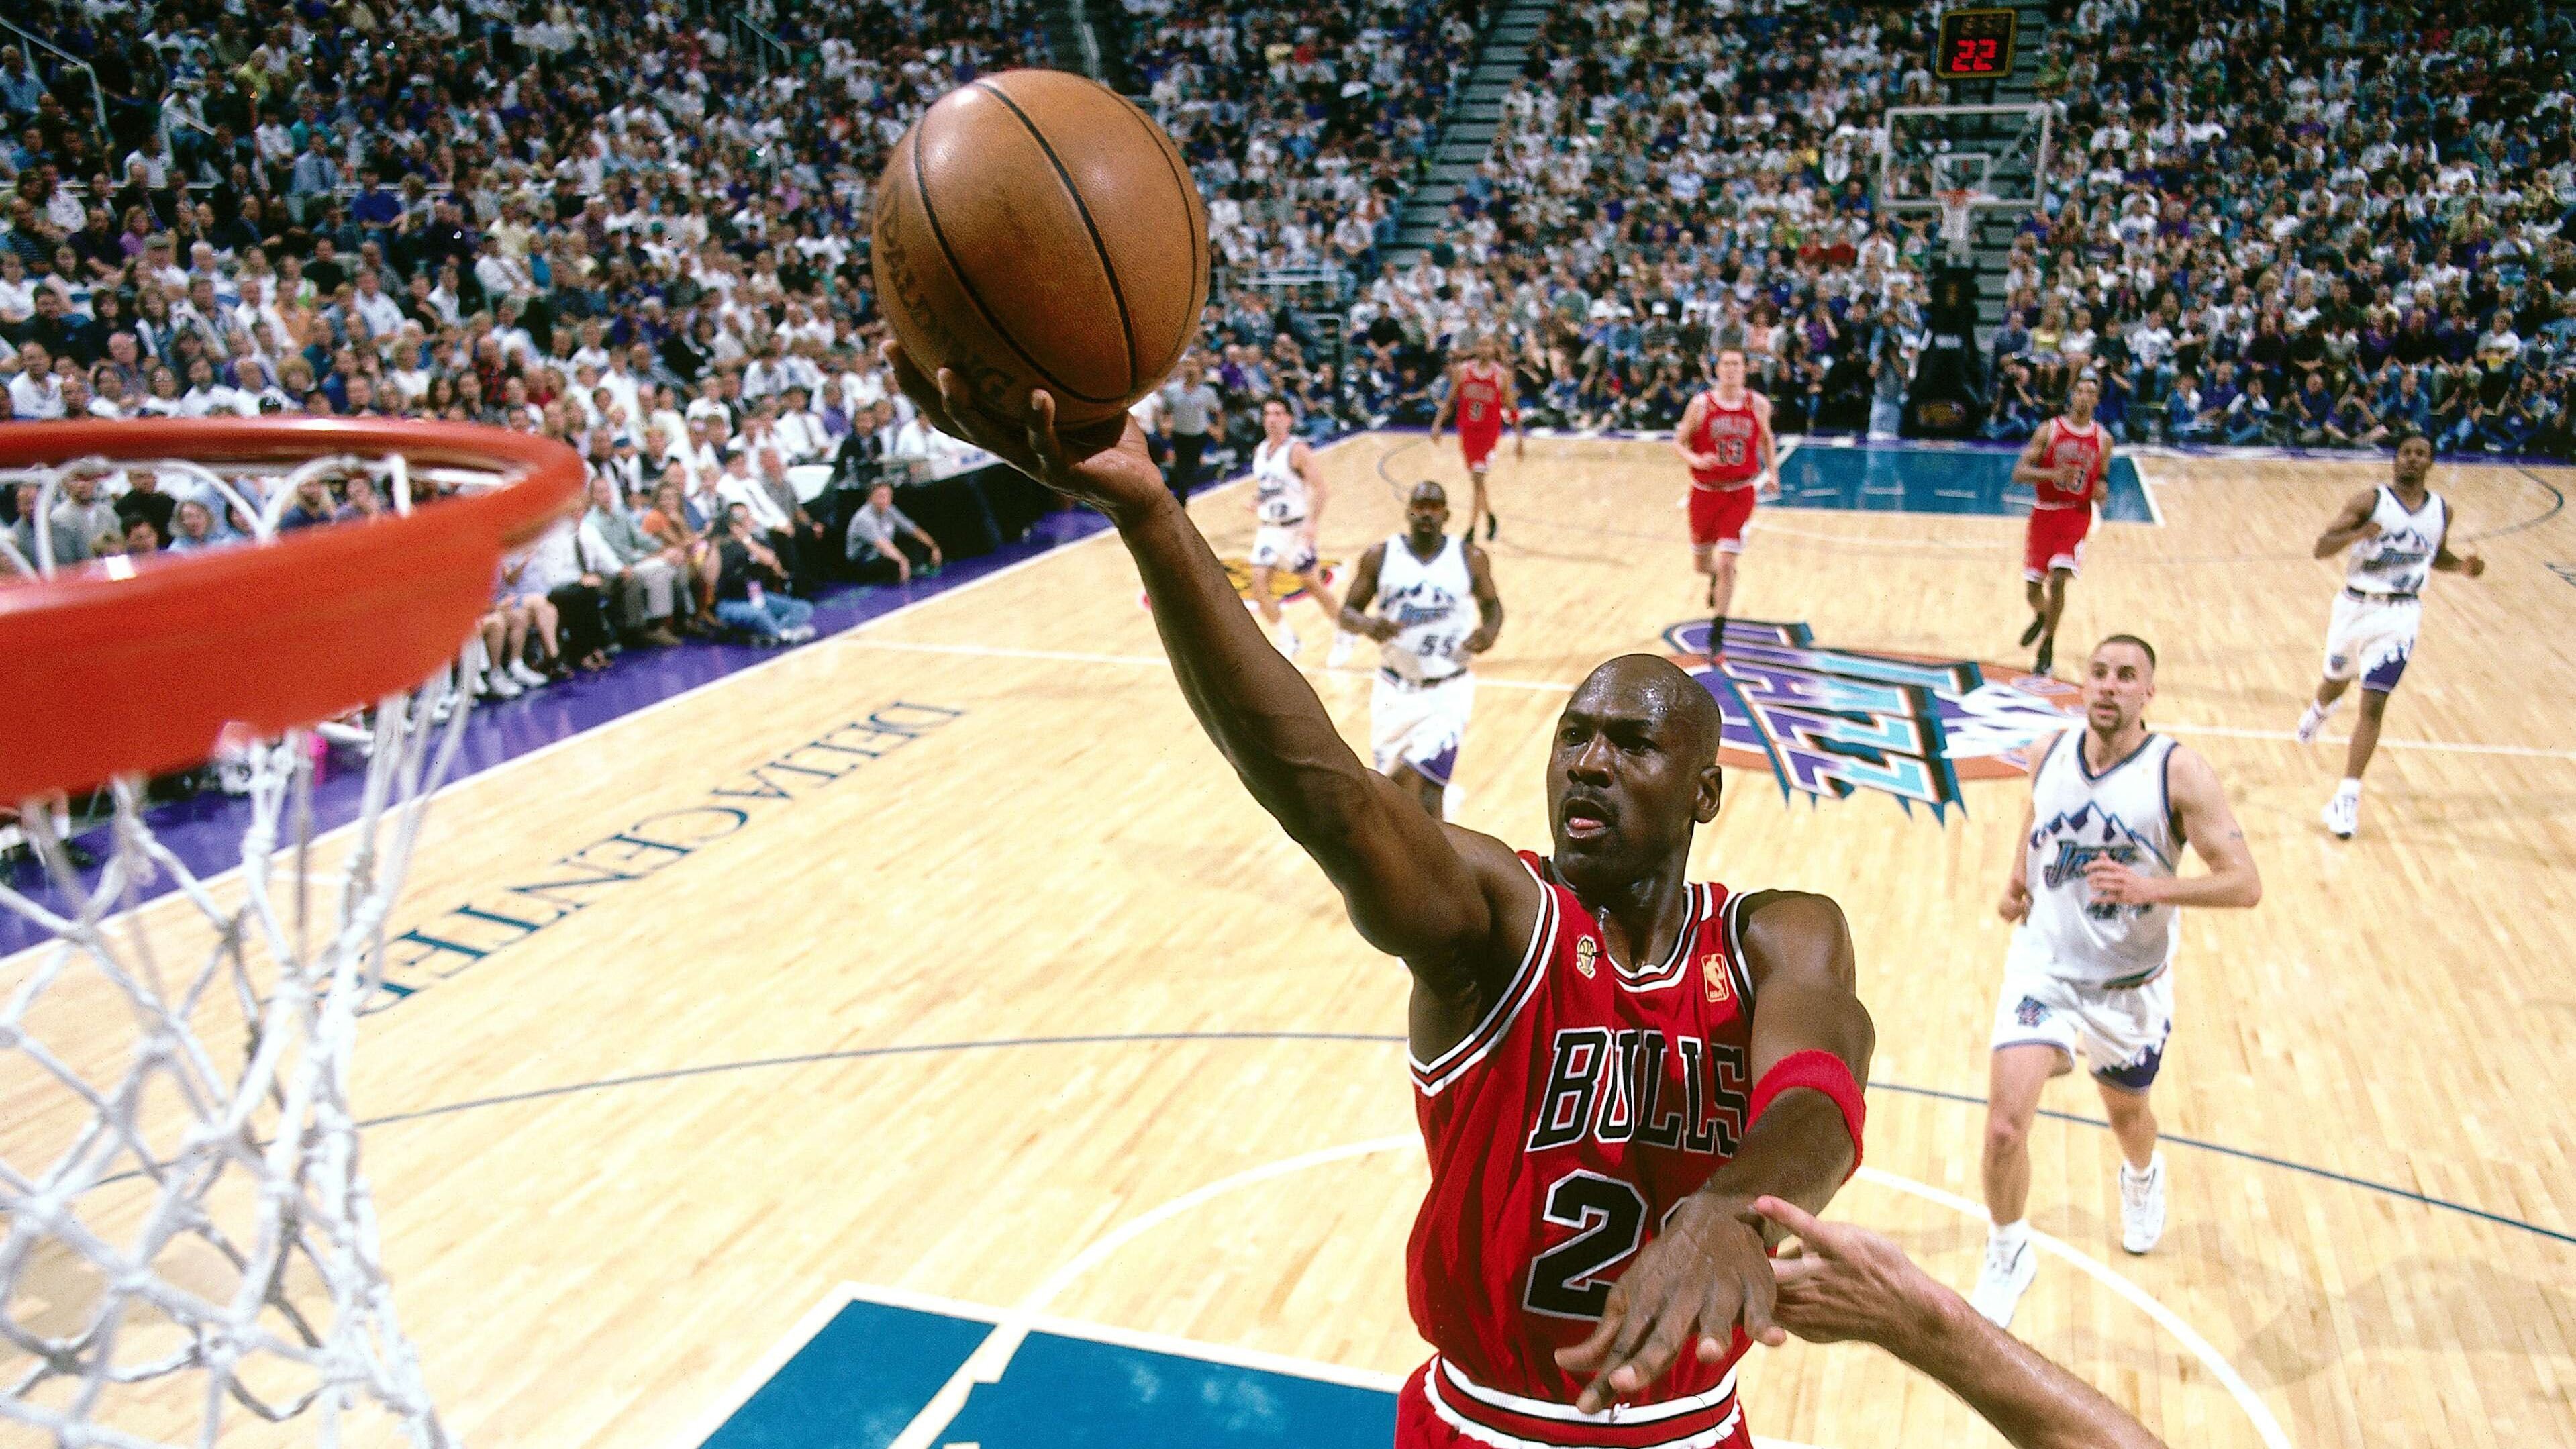 Jordan баскетболист. Баскетболисты NBA 1998. Лучший баскетболист всех времен